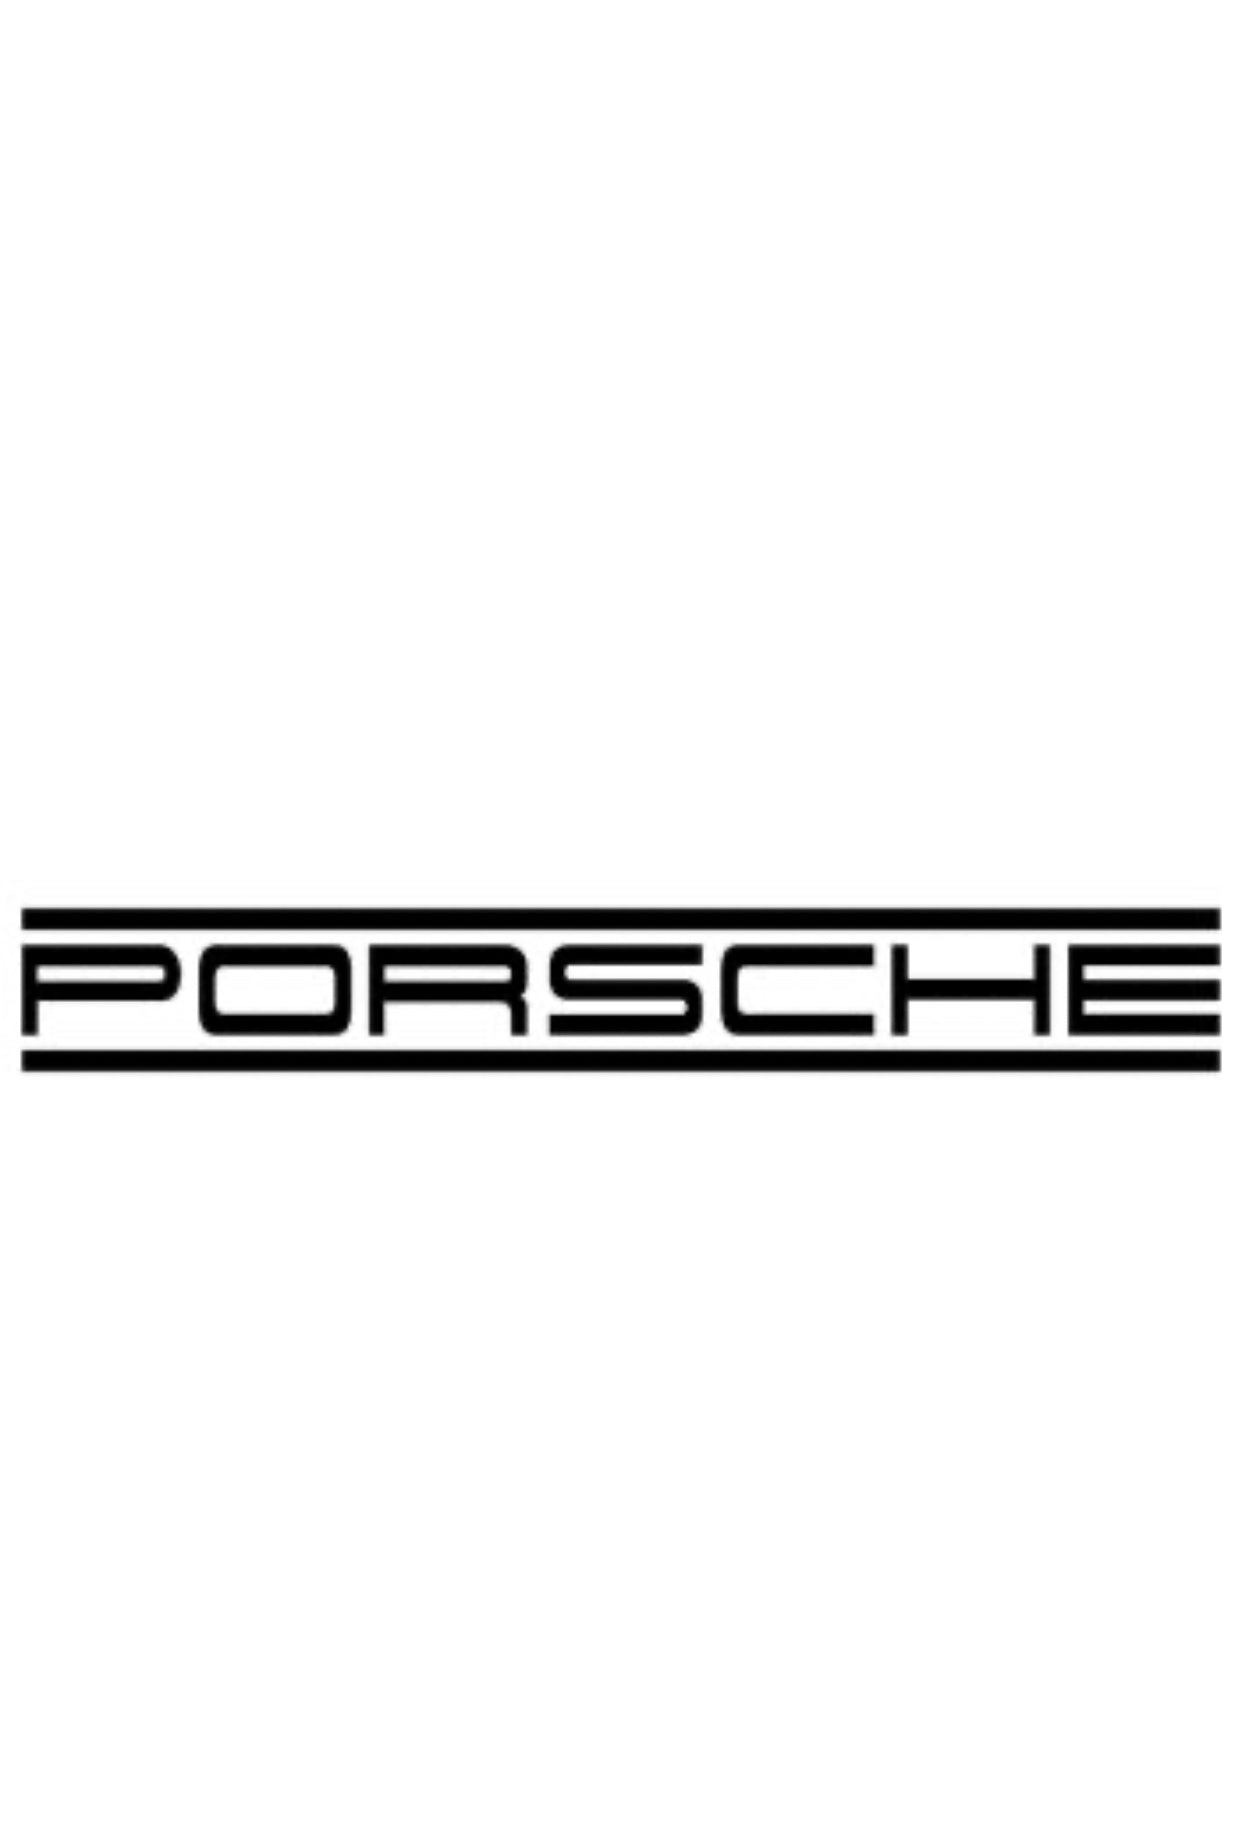 Porsche Panamera 970 Luftfahrwerk tieferlegen